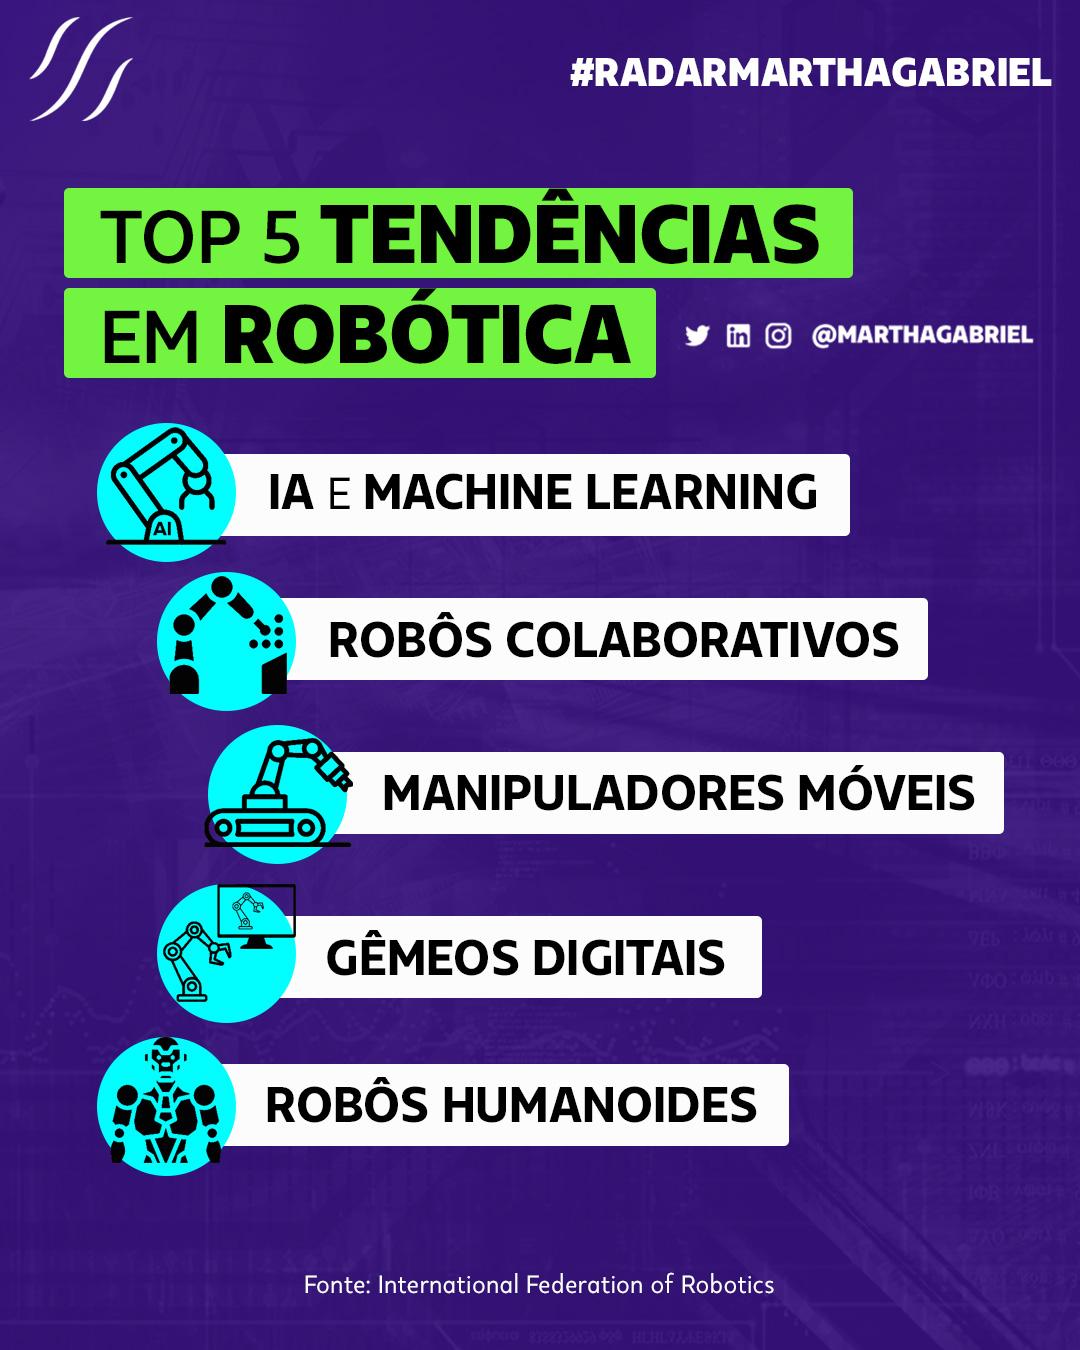 Top 5 Tendências em Robótica